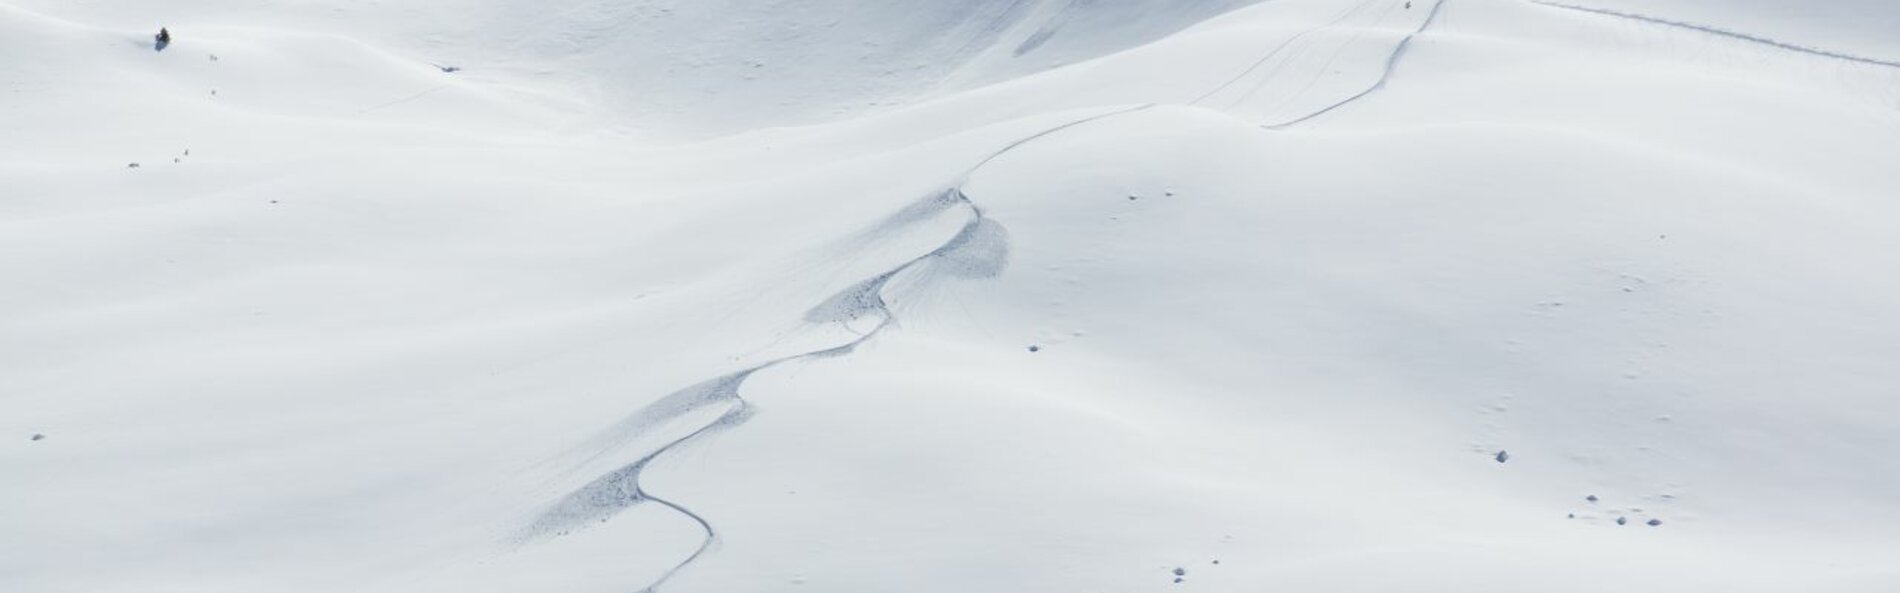 Snowboarder in snowy slope © Land Tirol